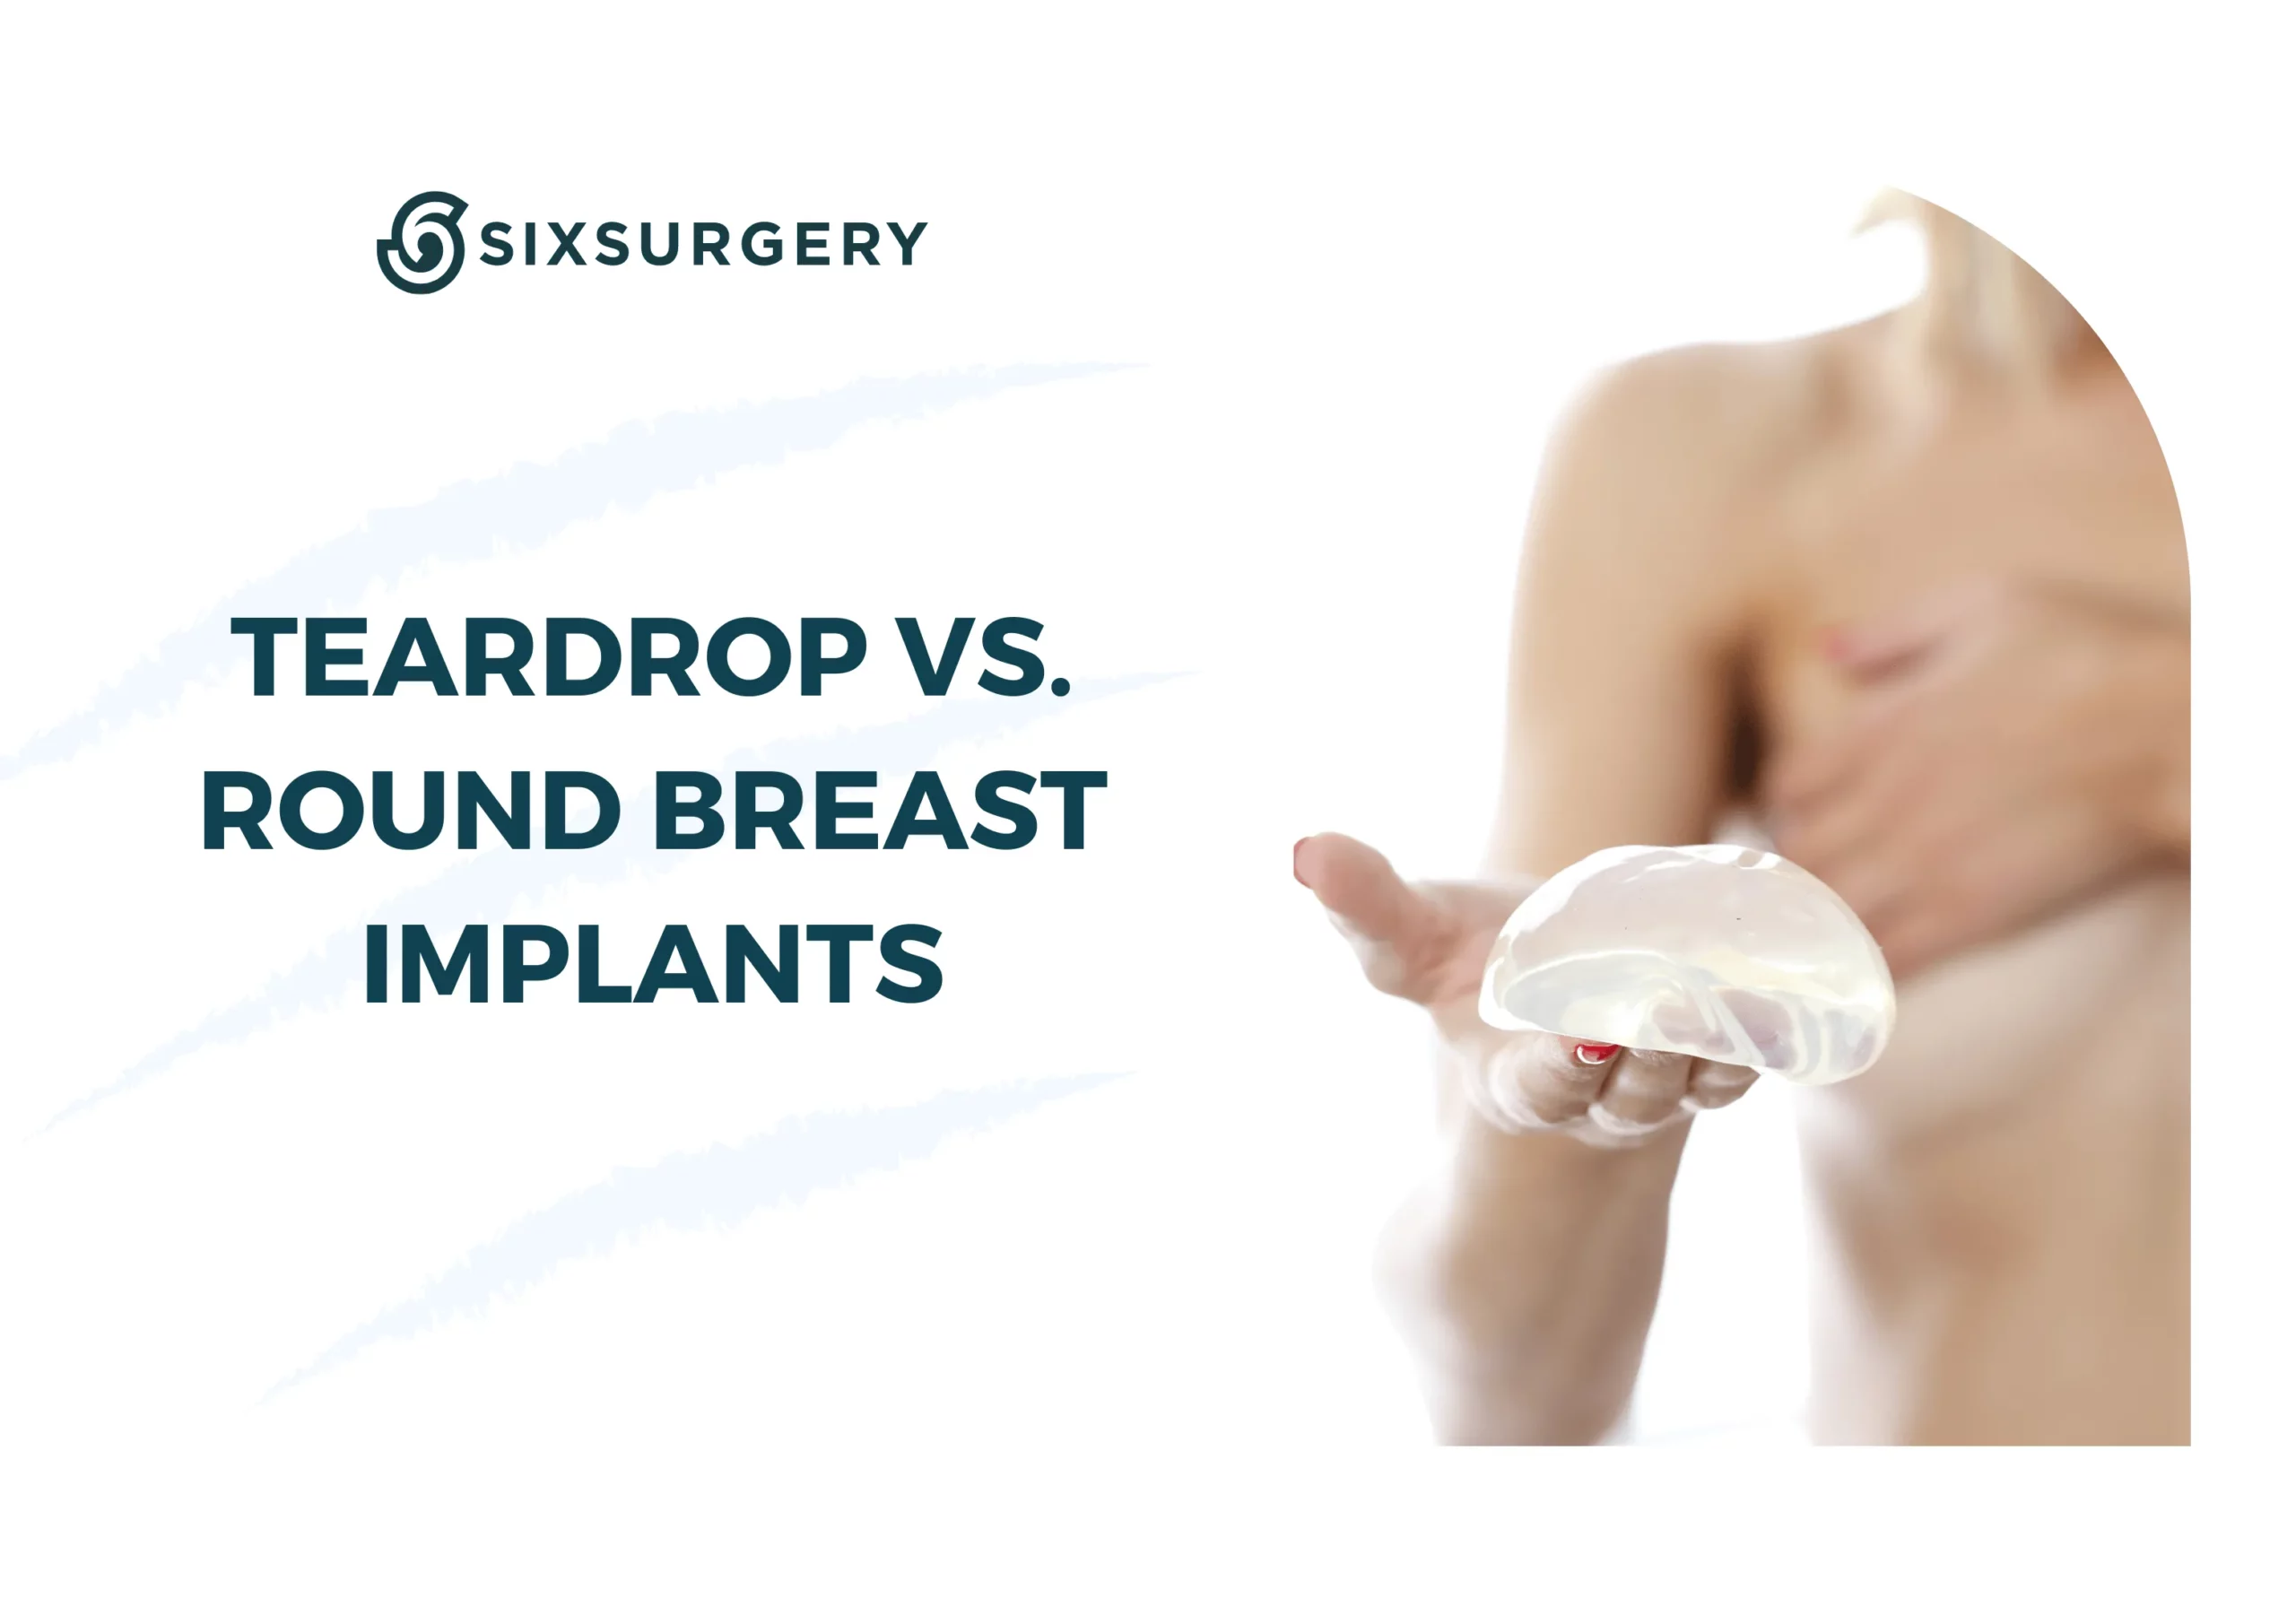 Teardrop vs. Round Breast Implants